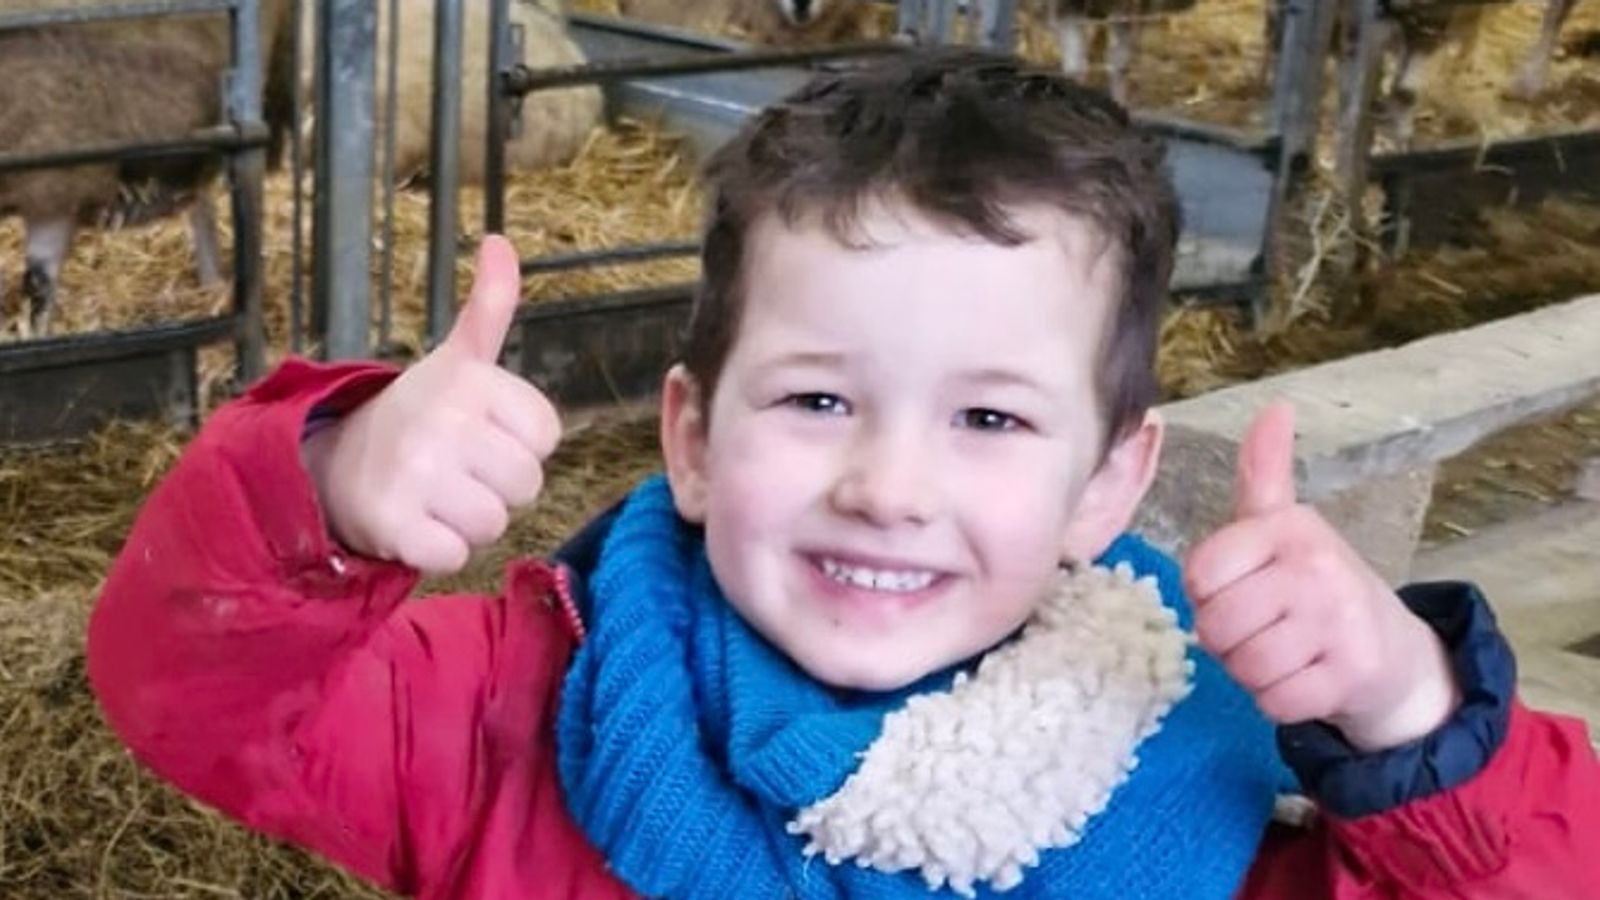 Maldwyn Evans: Family 'distraught' after death of four-year-old boy